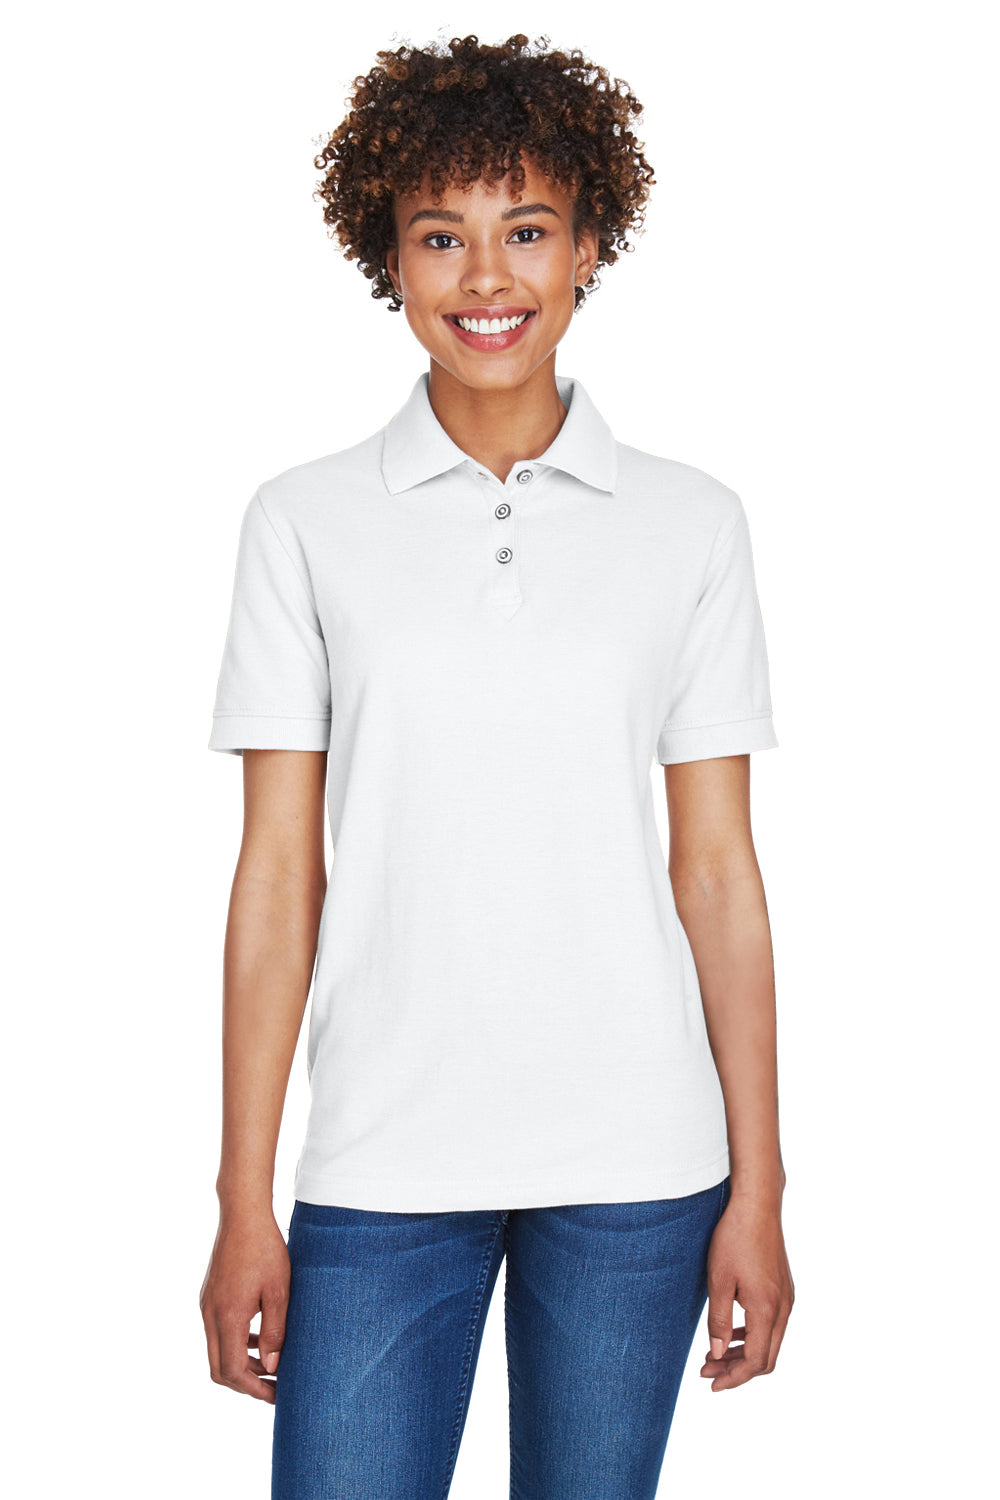 UltraClub 8541 Womens Whisper Short Sleeve Polo Shirt White Front